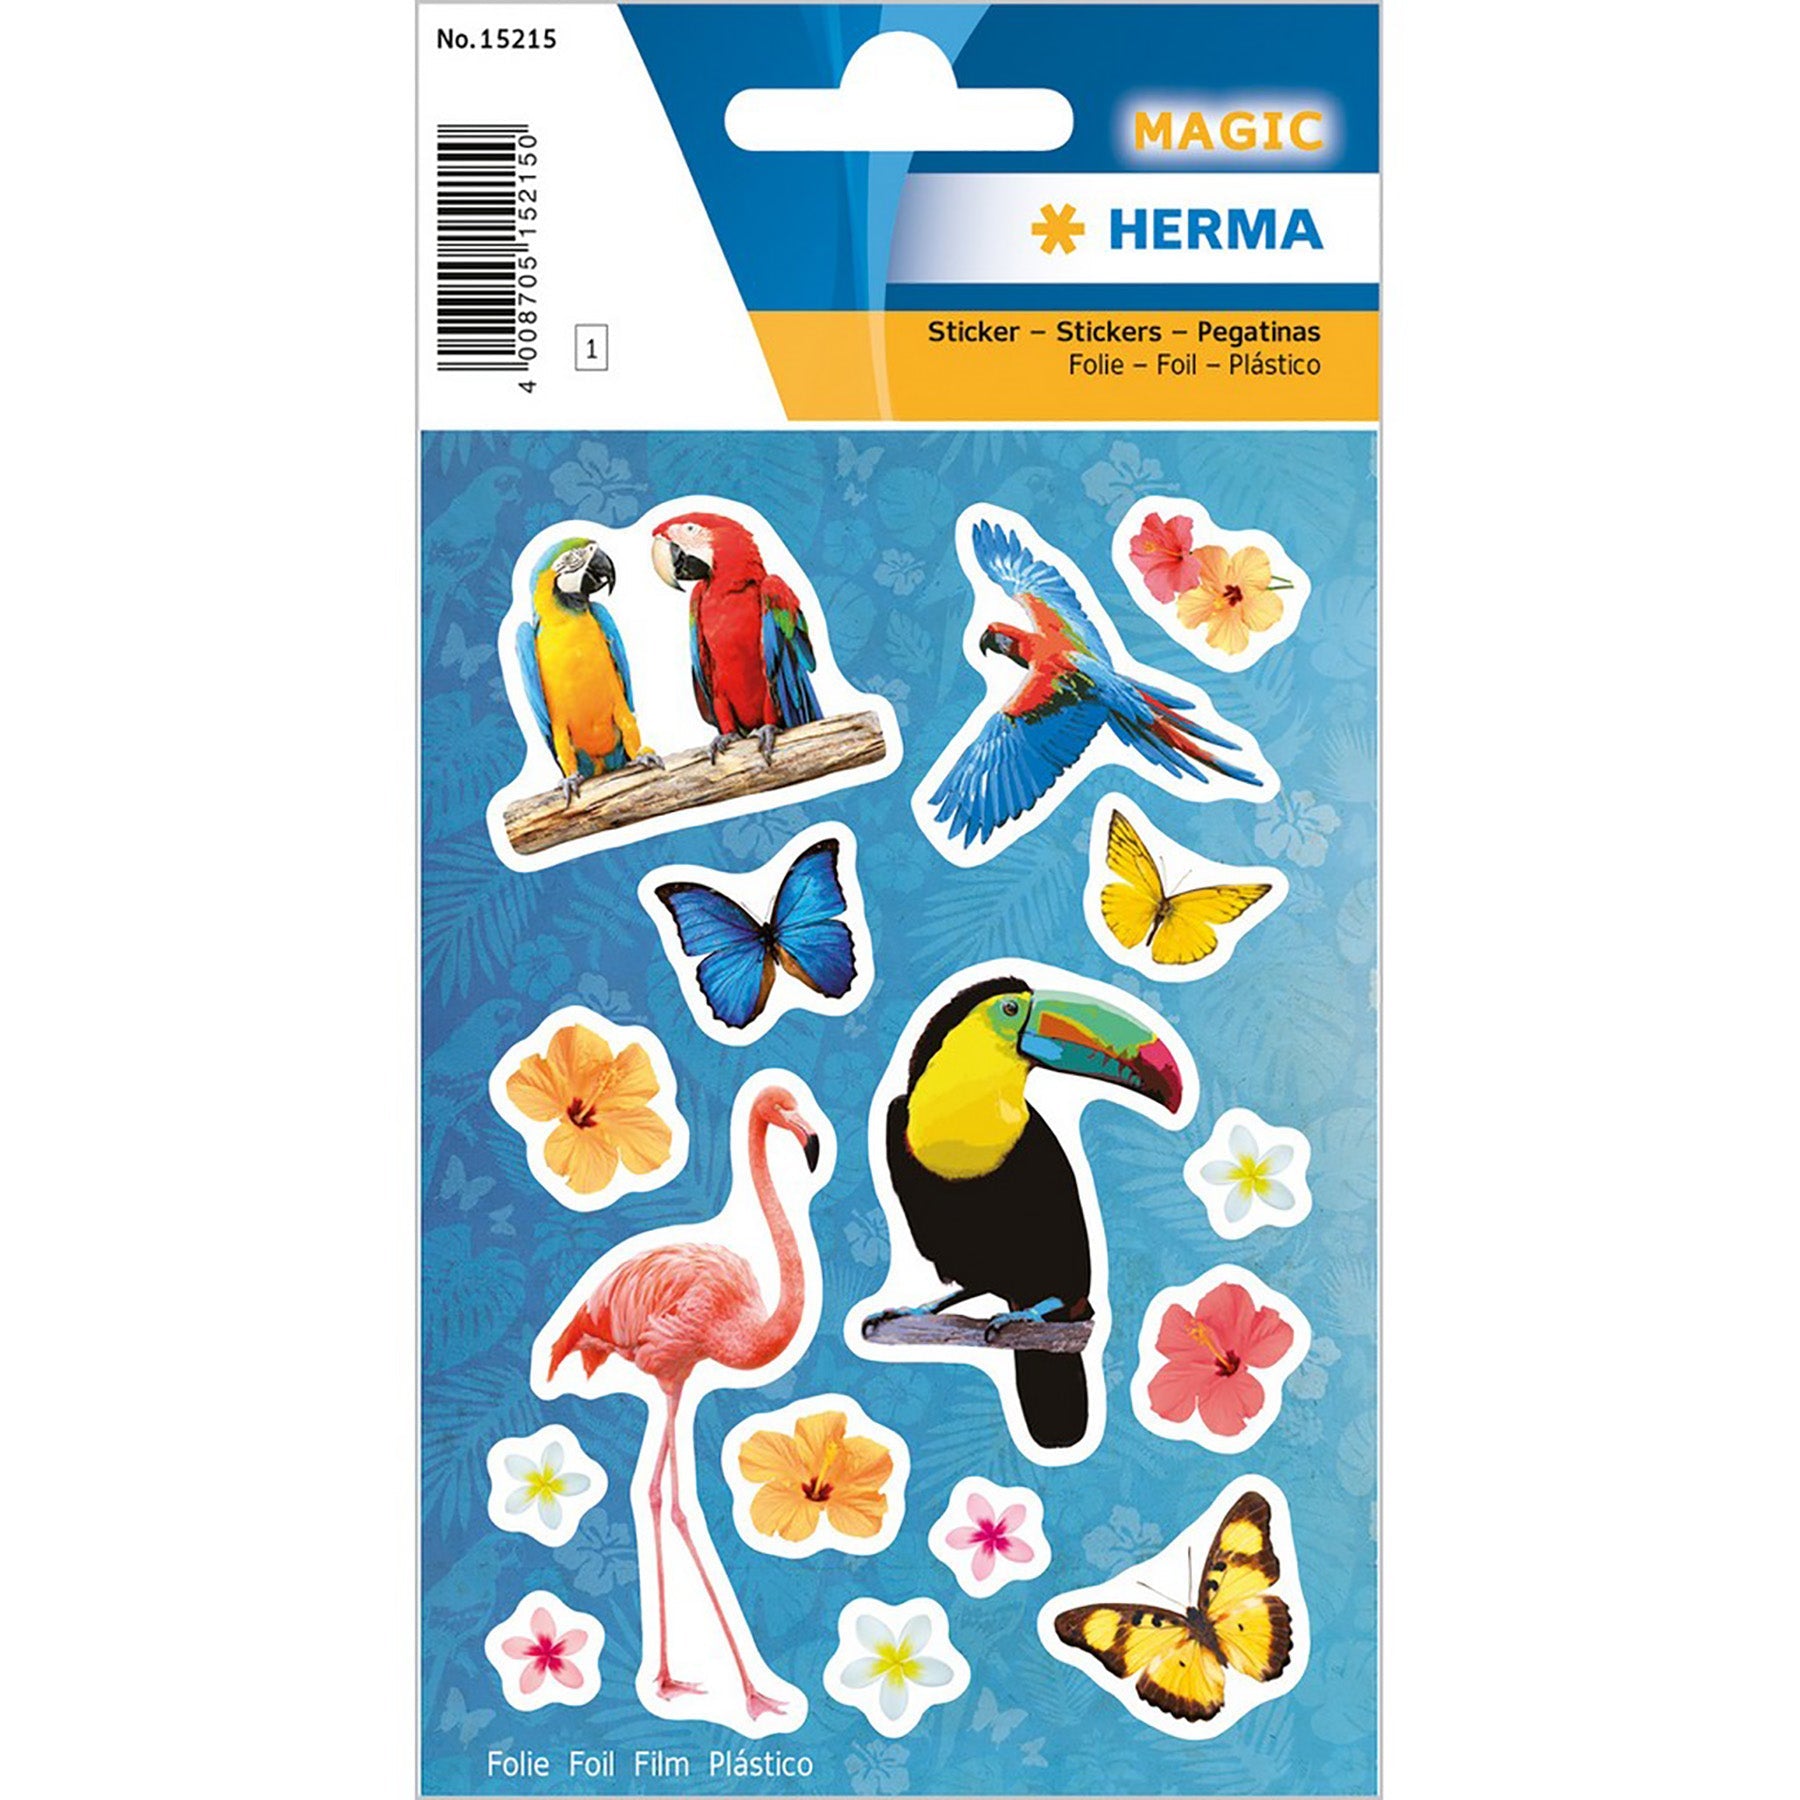 Herma Magic Stickers Paradise Foil 4.75x3.1in Sheet